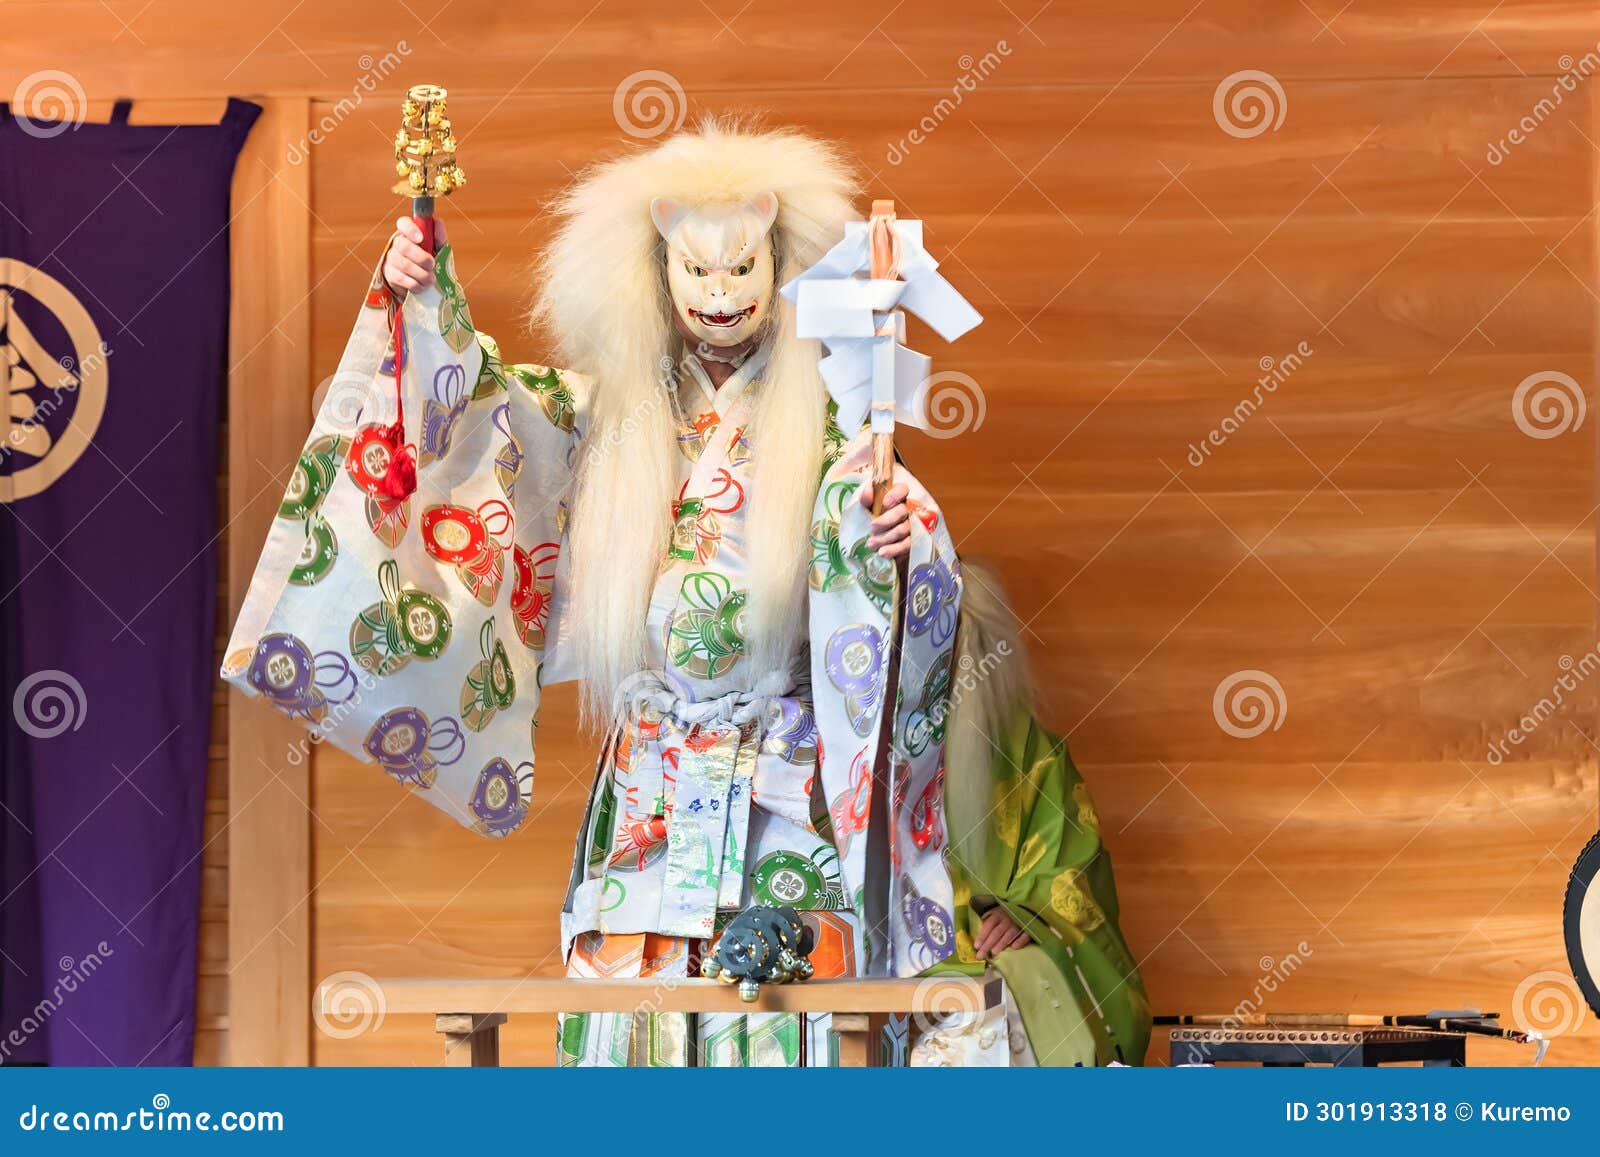 kagura dance performed by the inari fox deity holding suzu bells and a gohei wand.